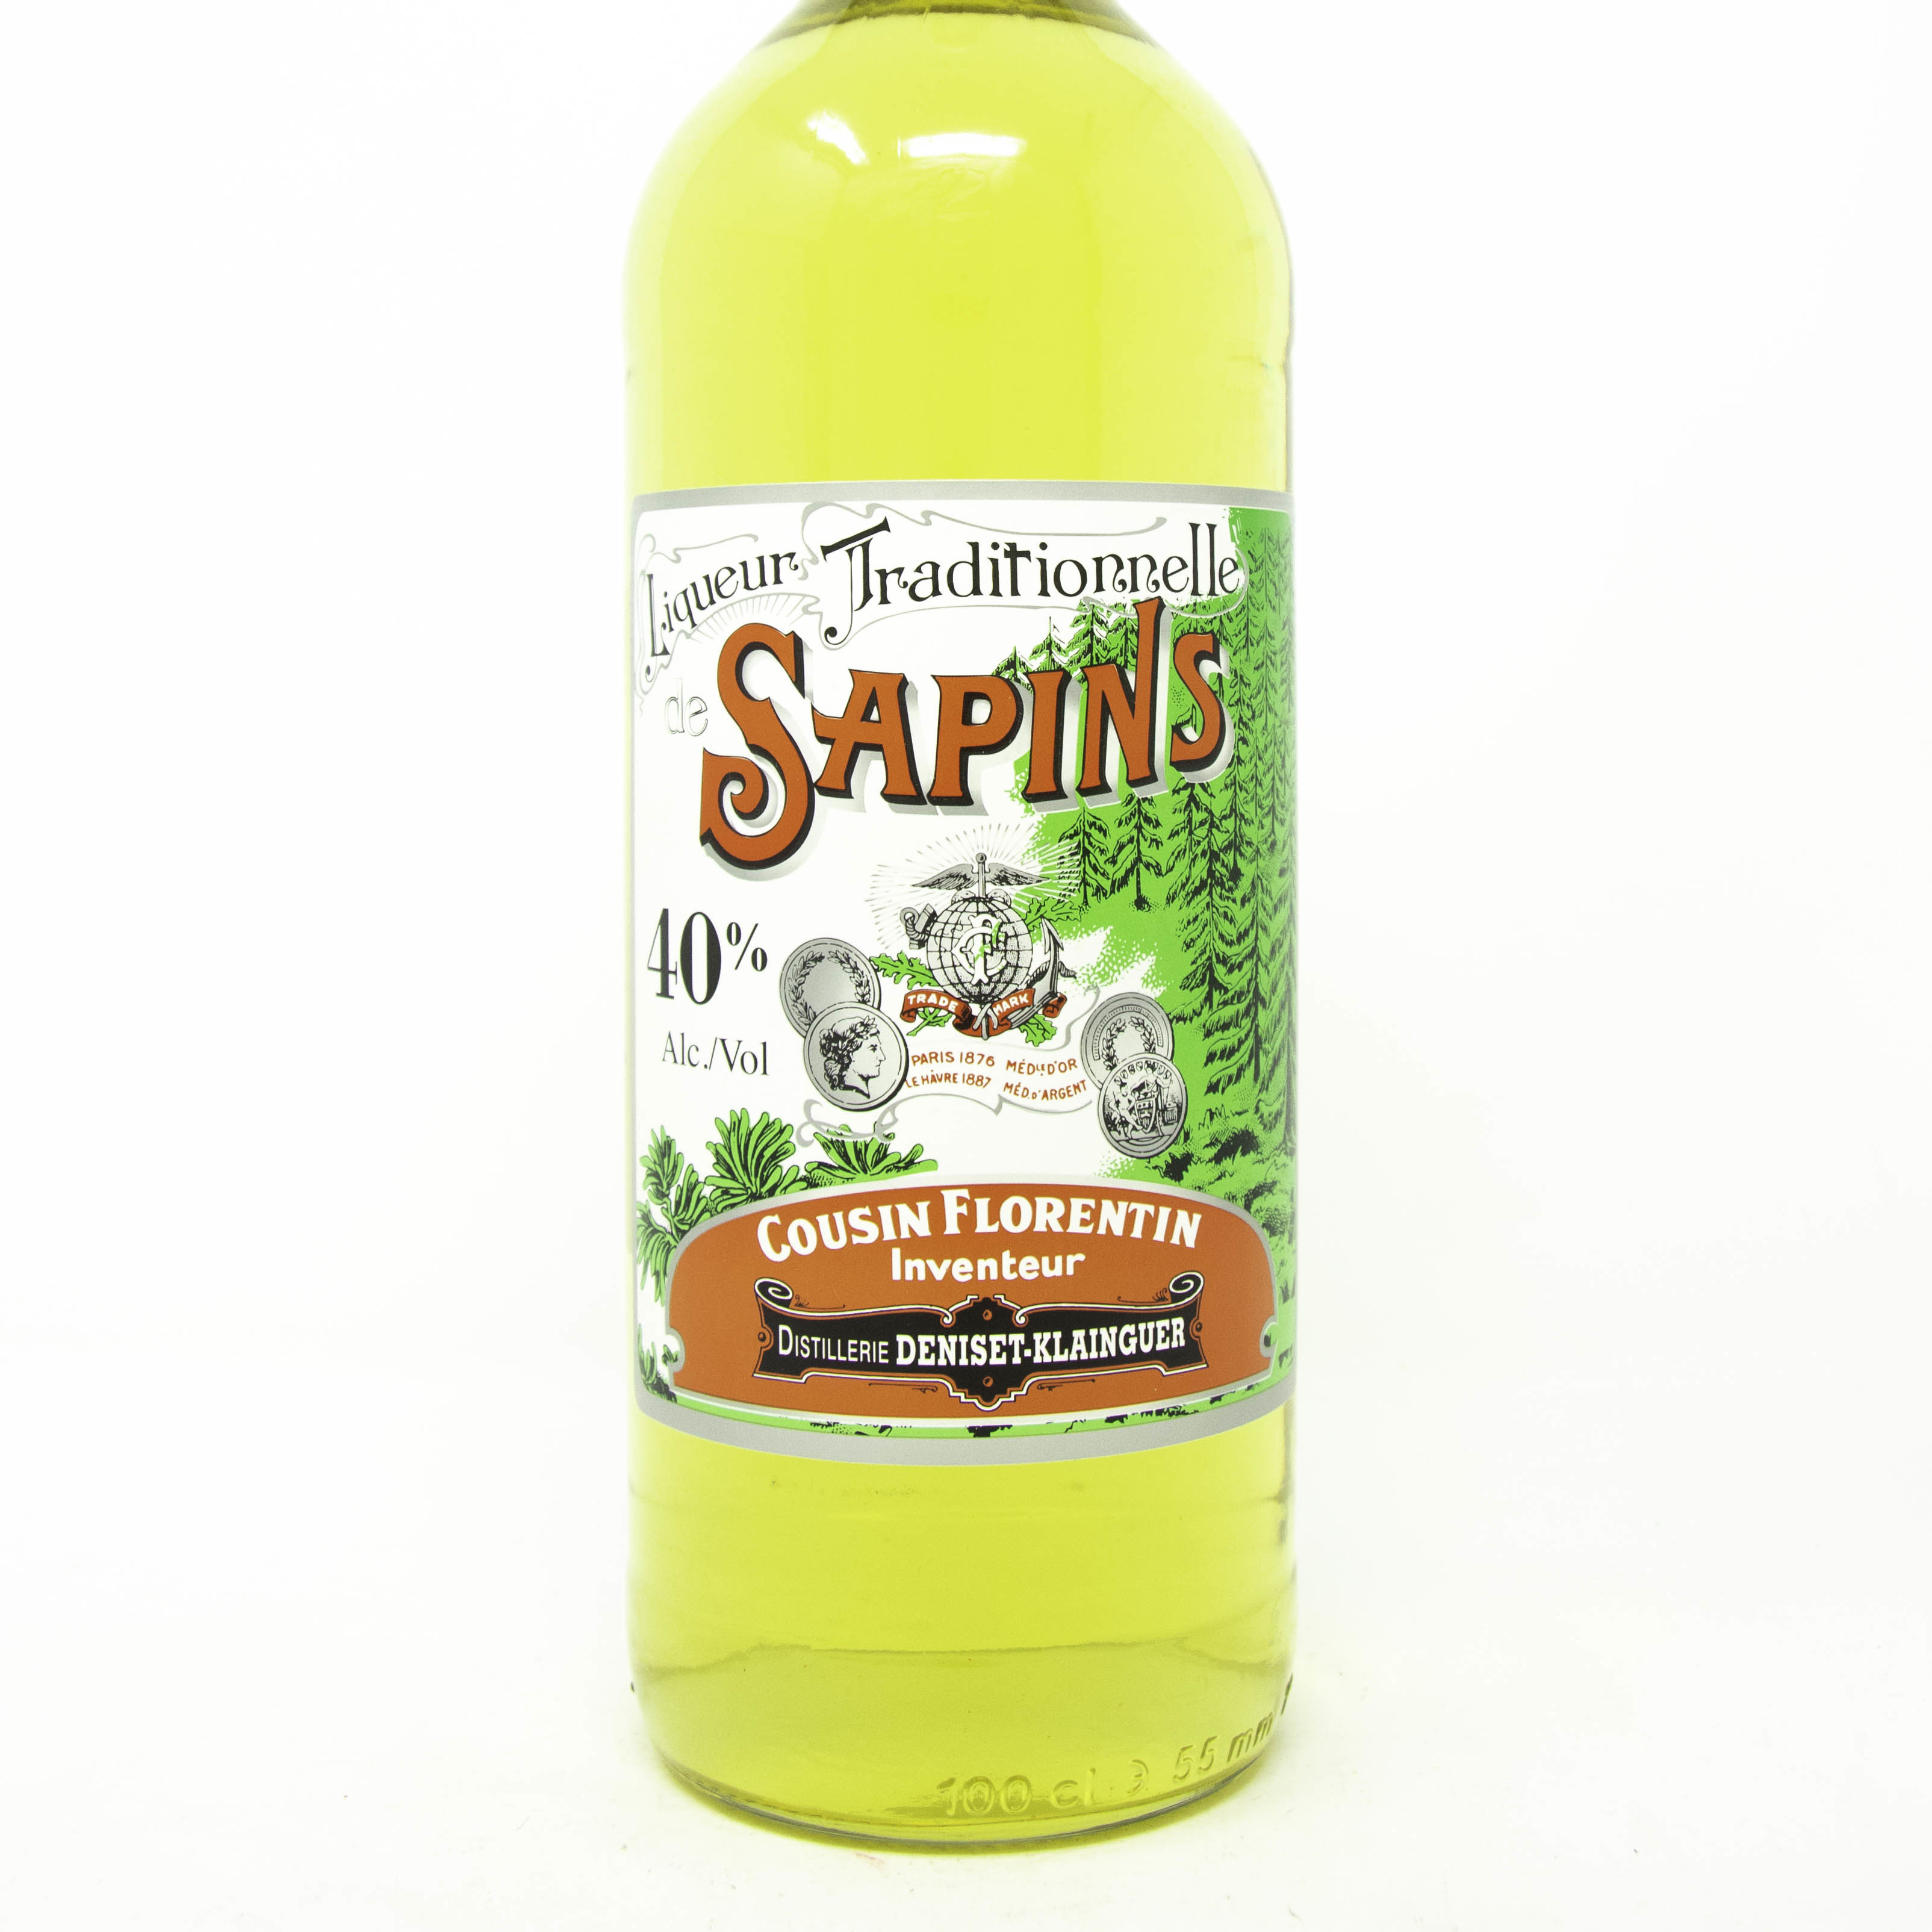 Liqueur de Sapin